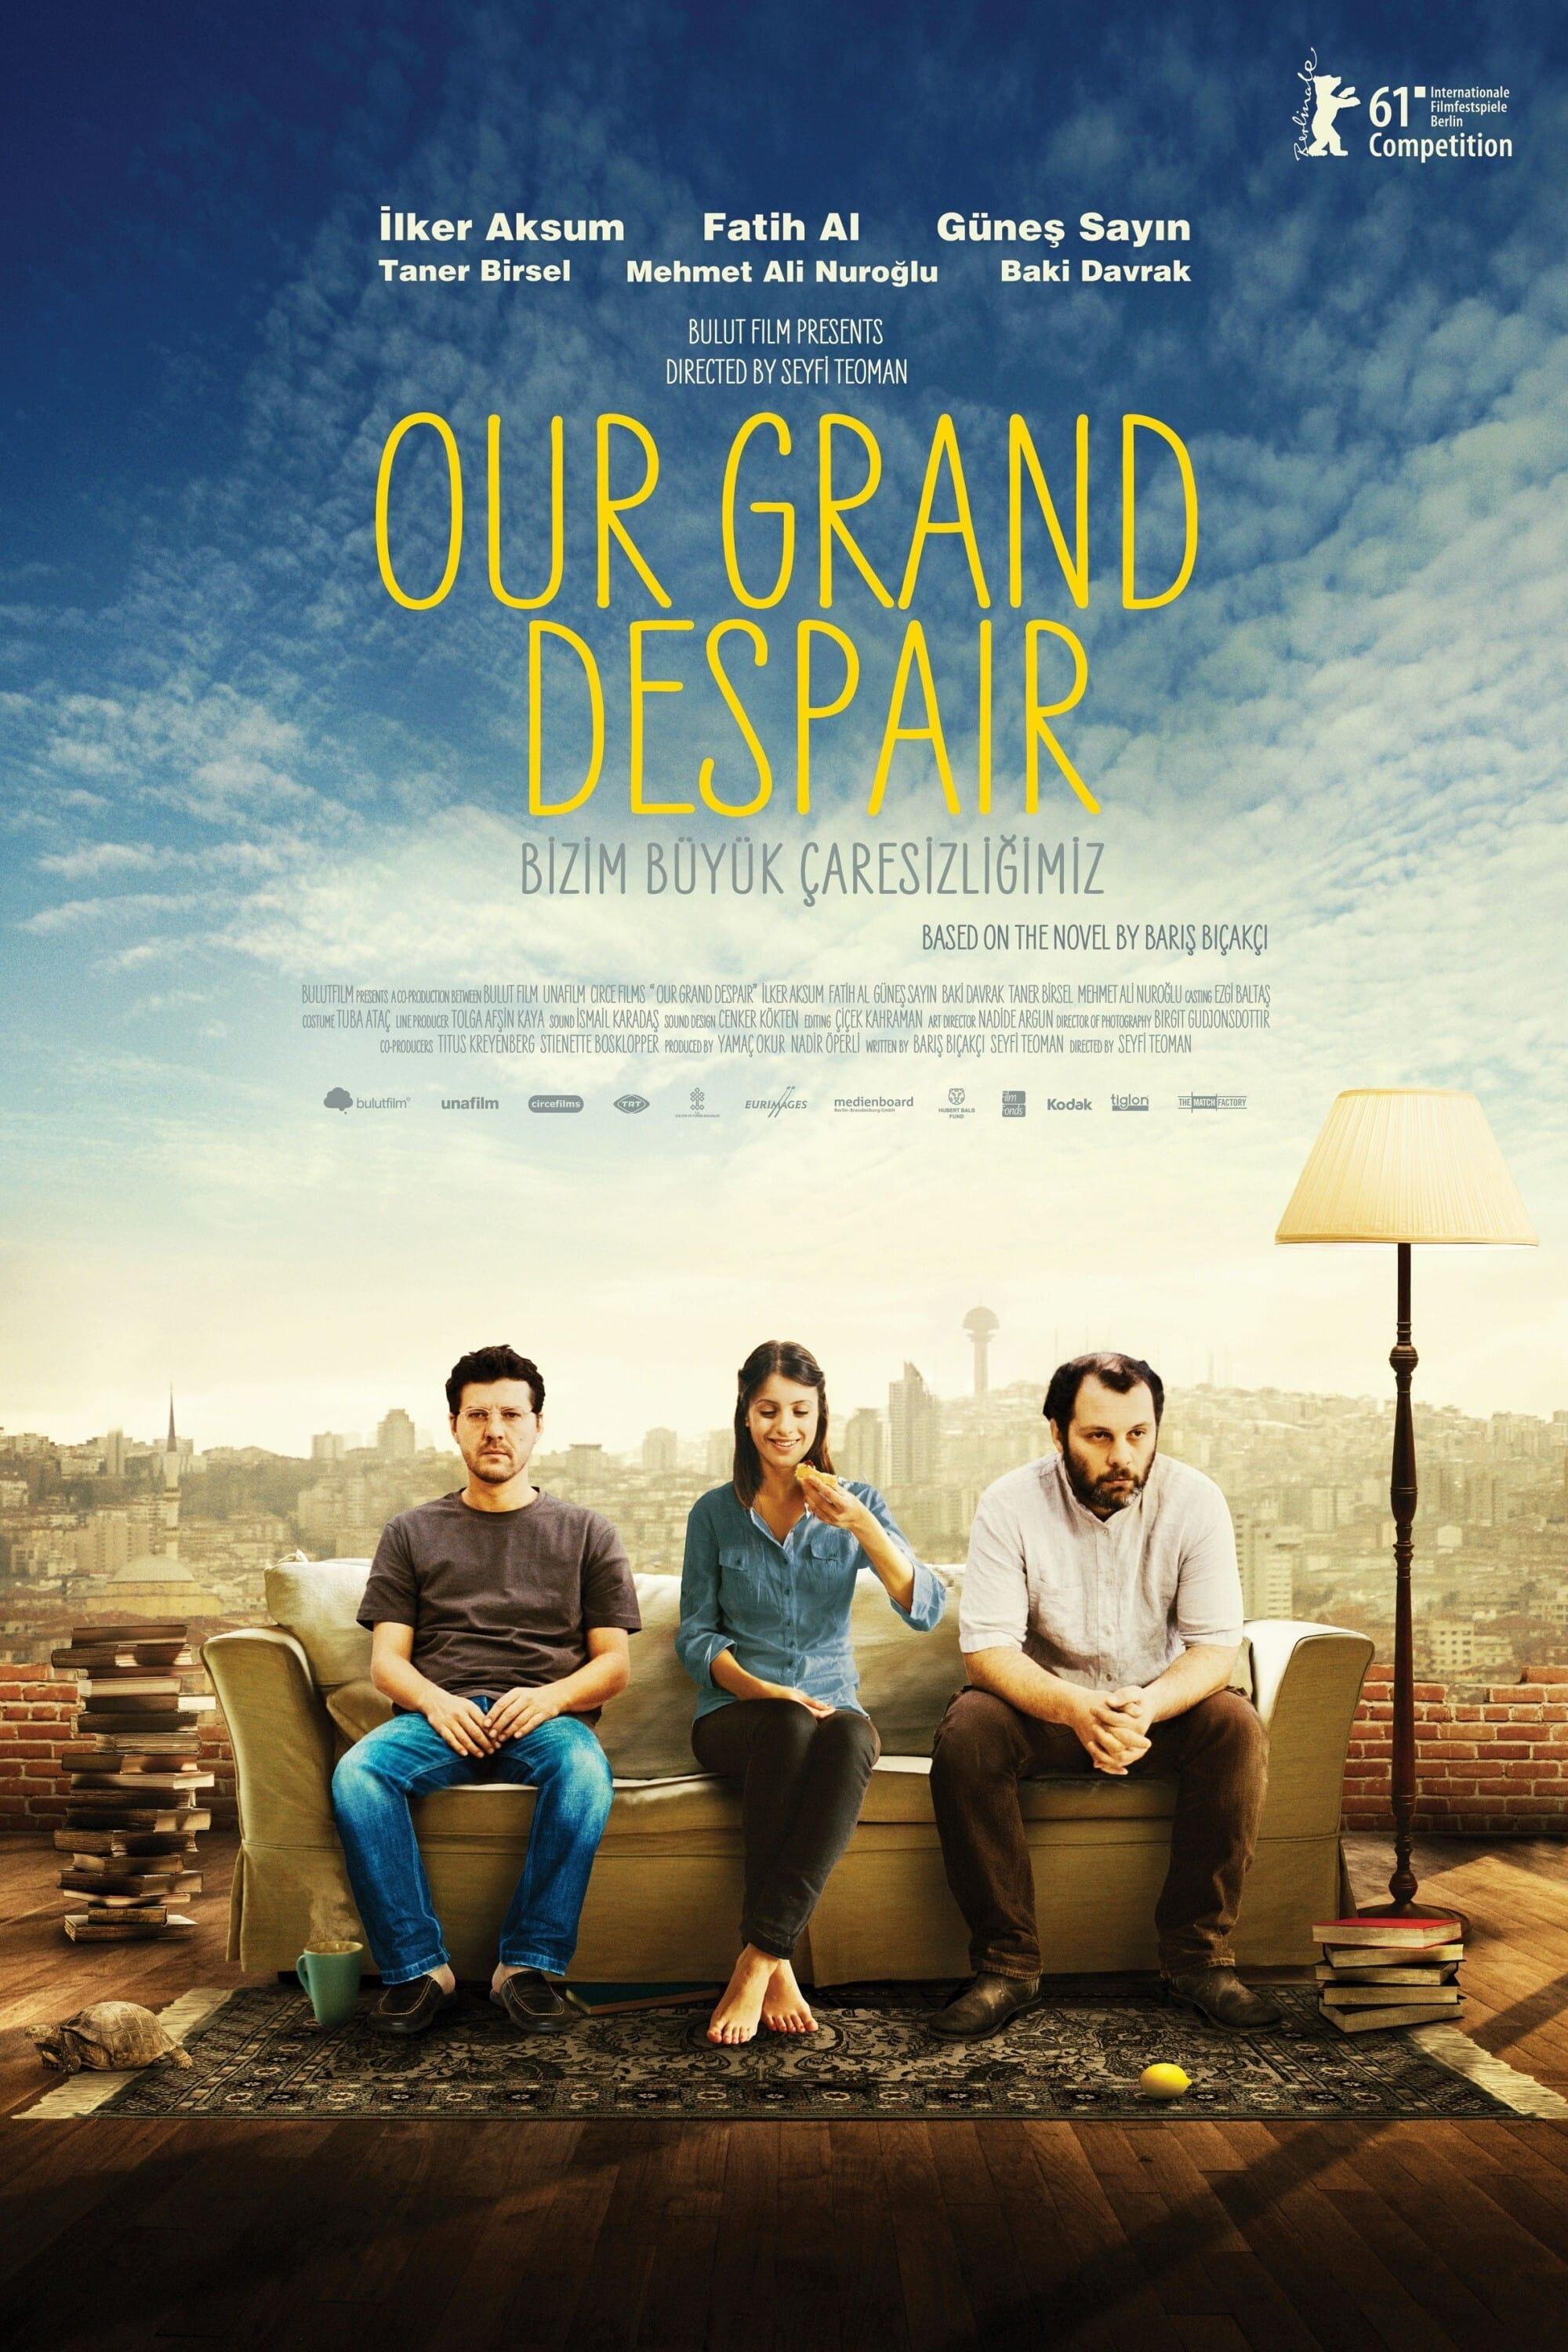 Our Grand Despair poster